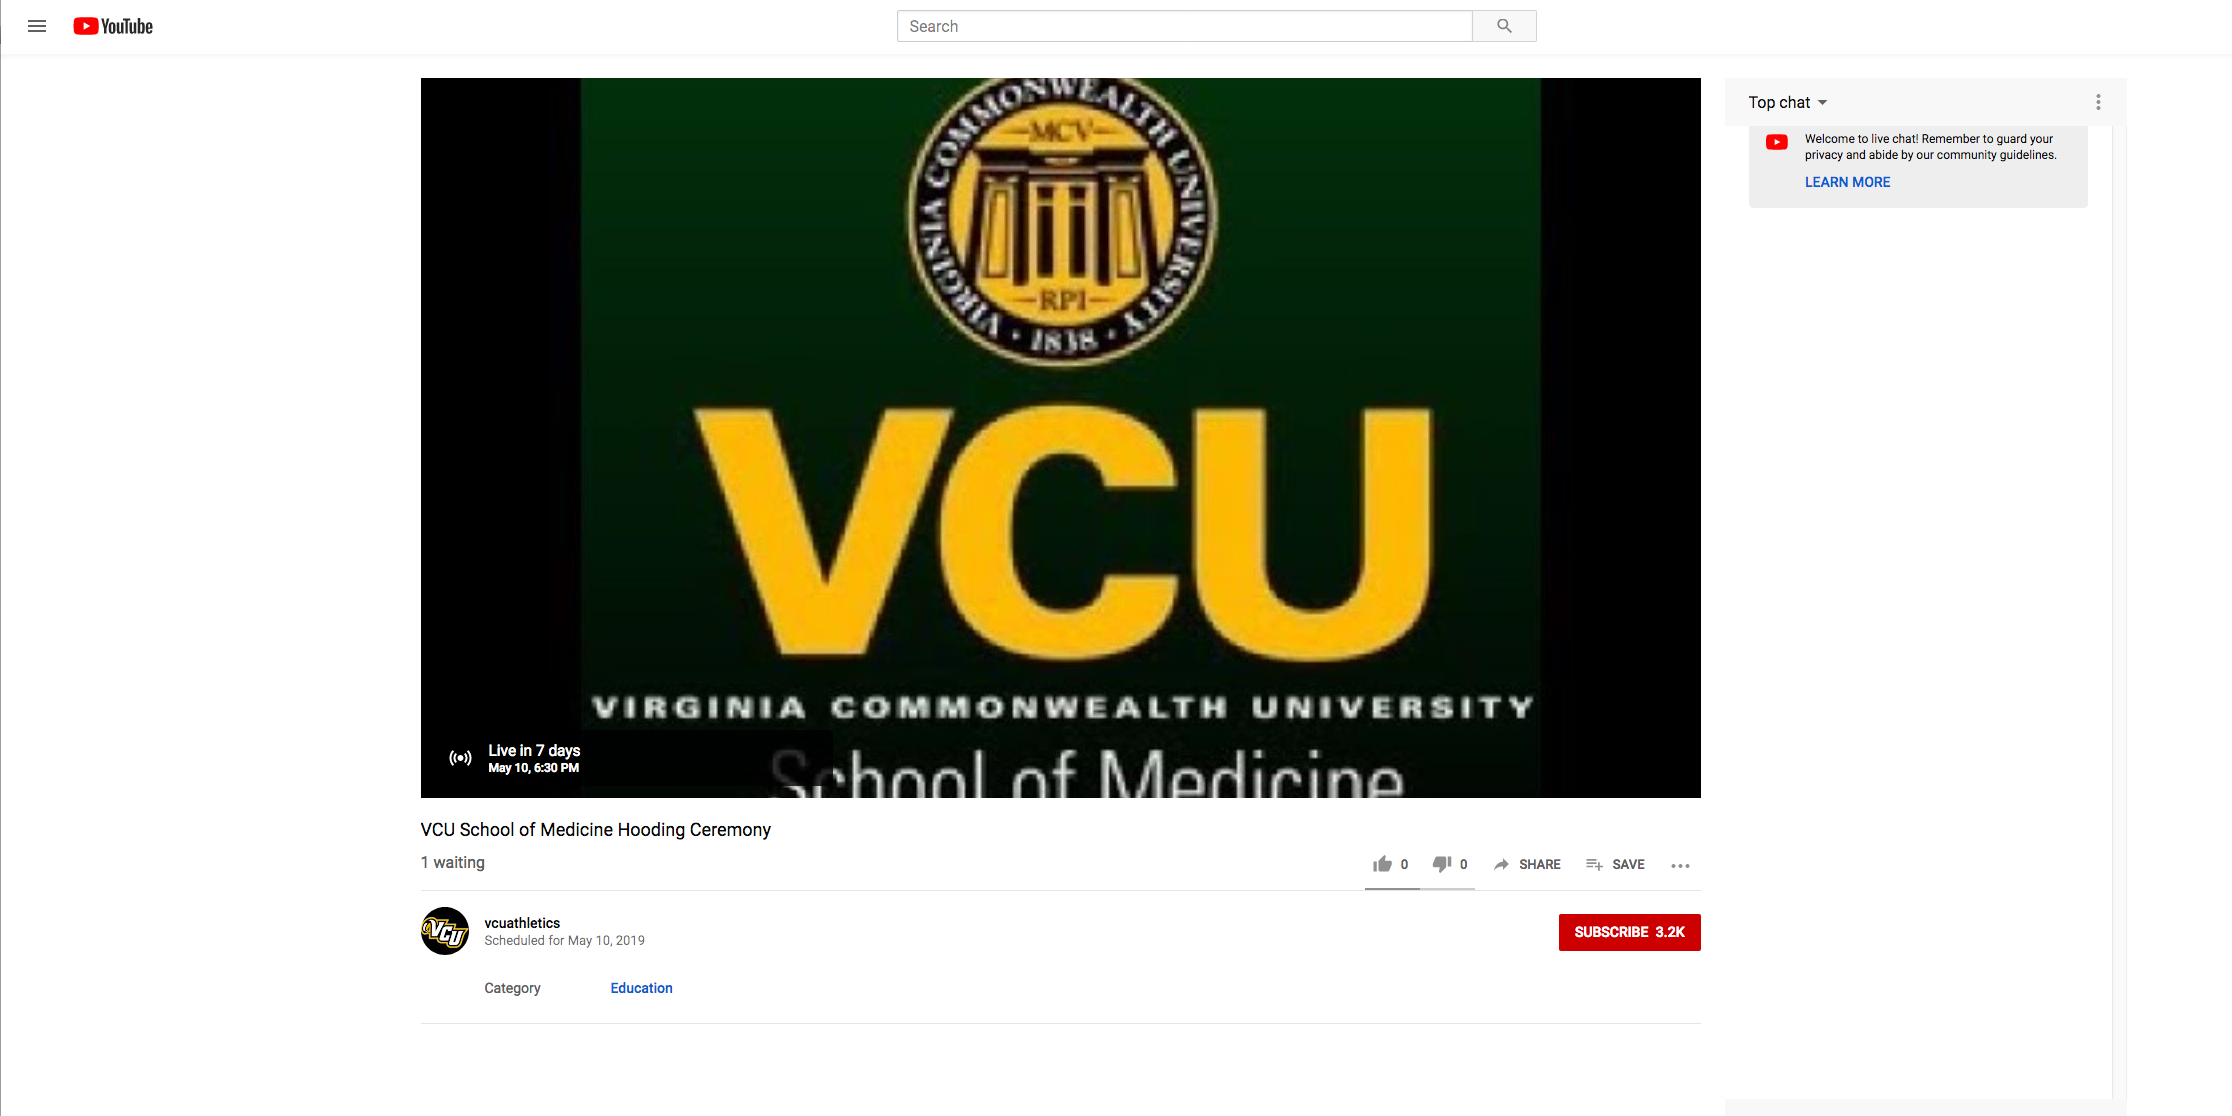 2019 VCU School of Medicine Hooding Ceremony